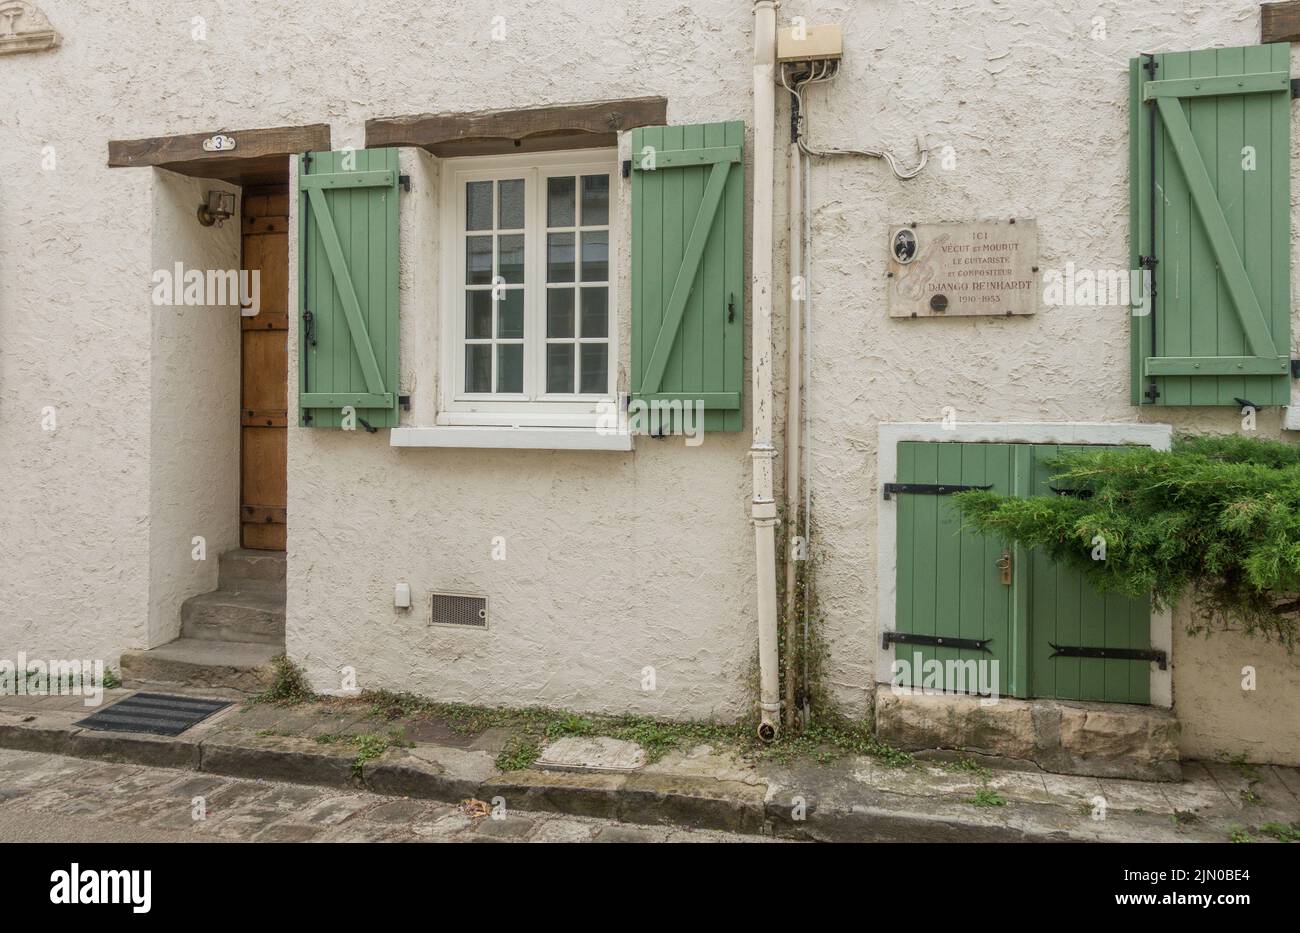 Fachada de la casa donde vivió el músico de jazz, Django Reinhardt. Francia, Seine et Marne, Samois sur Seine Foto de stock